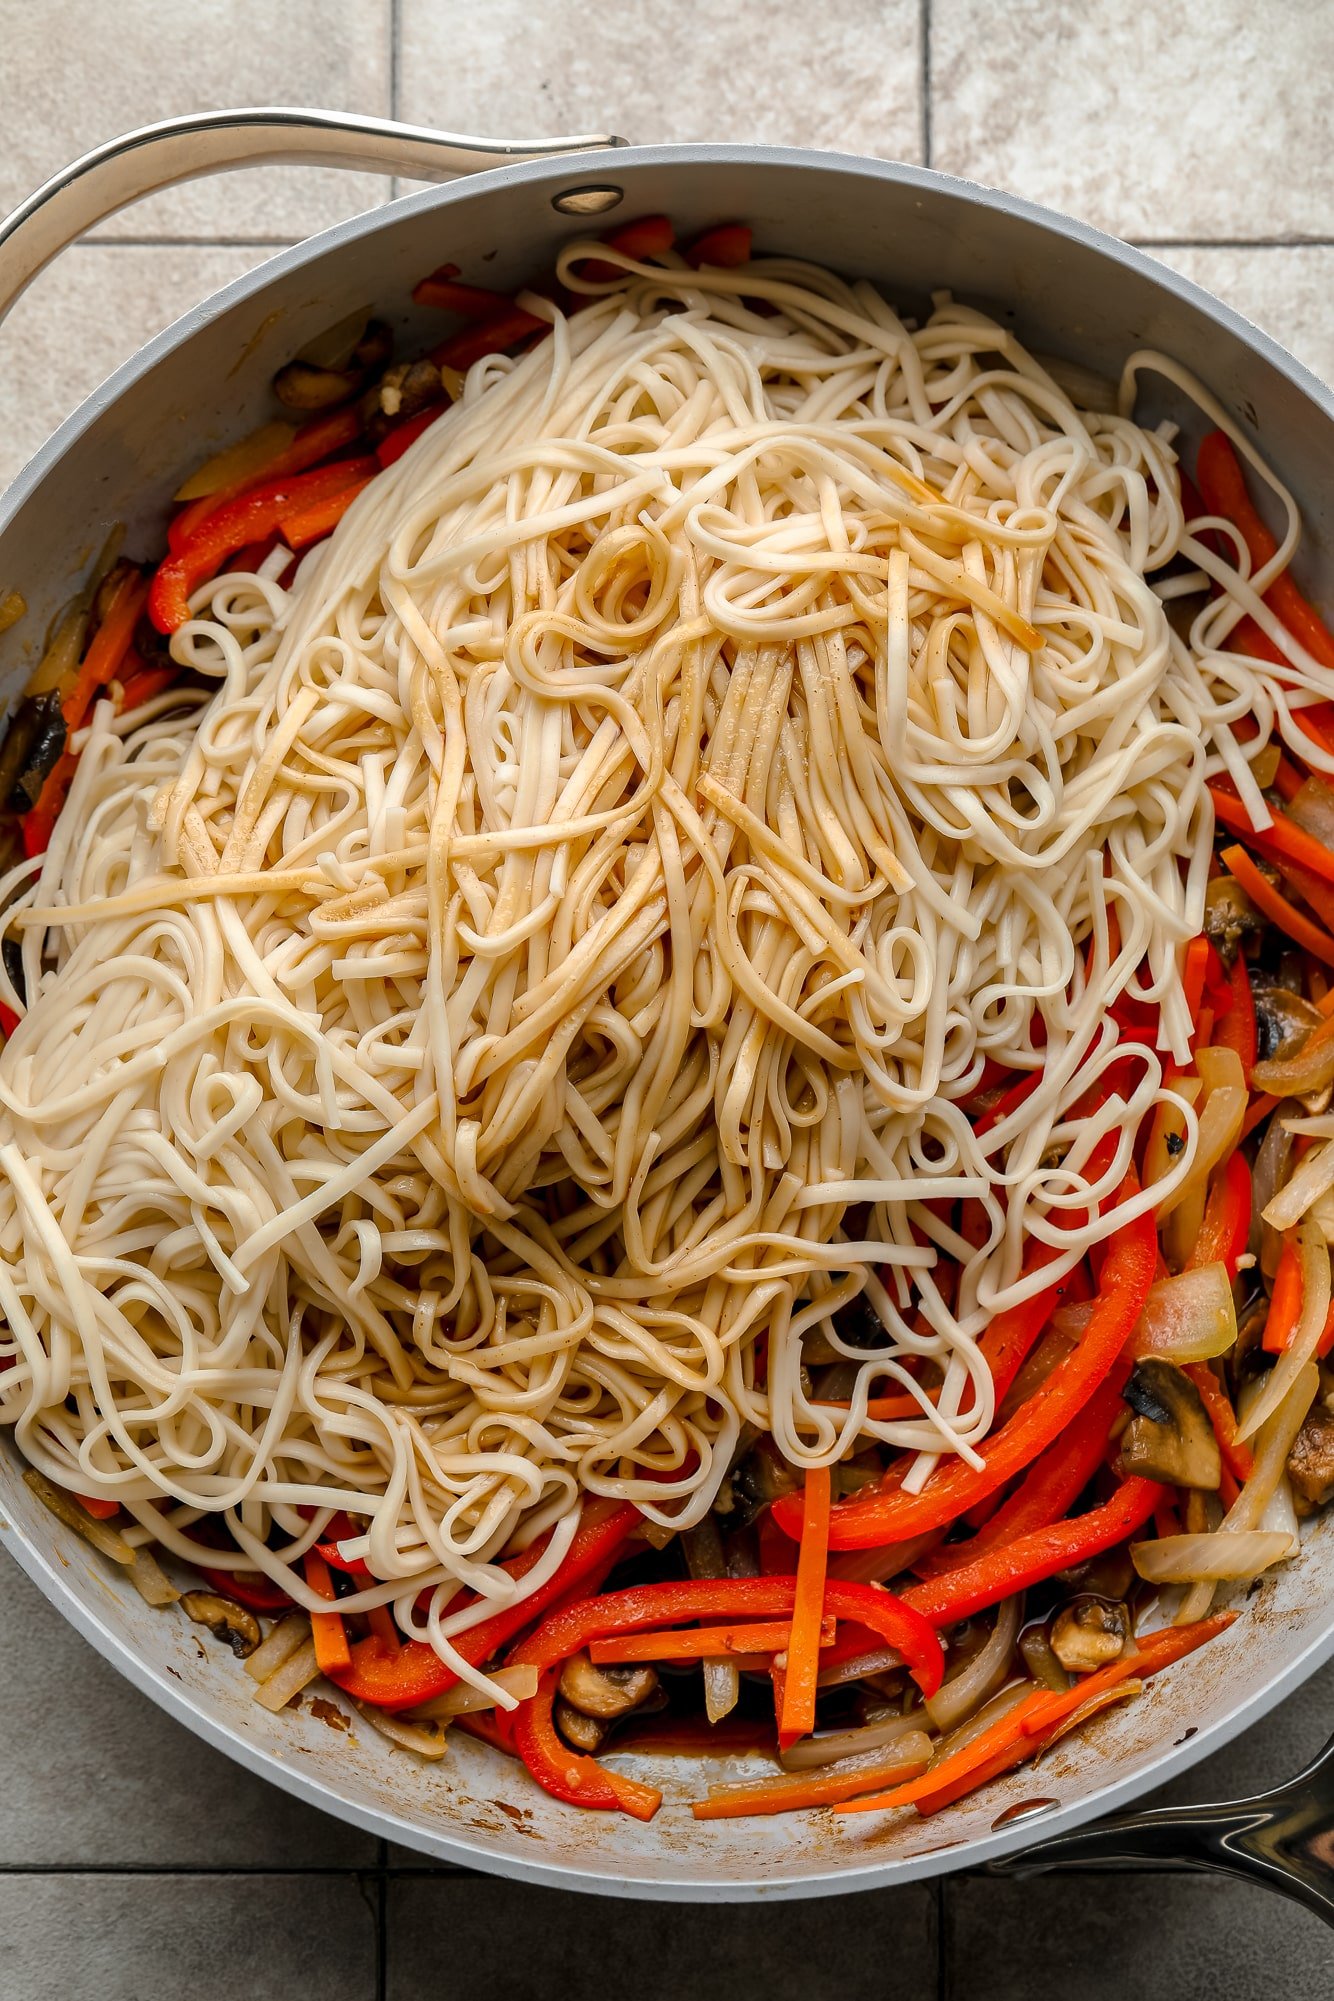 cooked noodles on top of stir-fried vegetables in a large gray skillet.